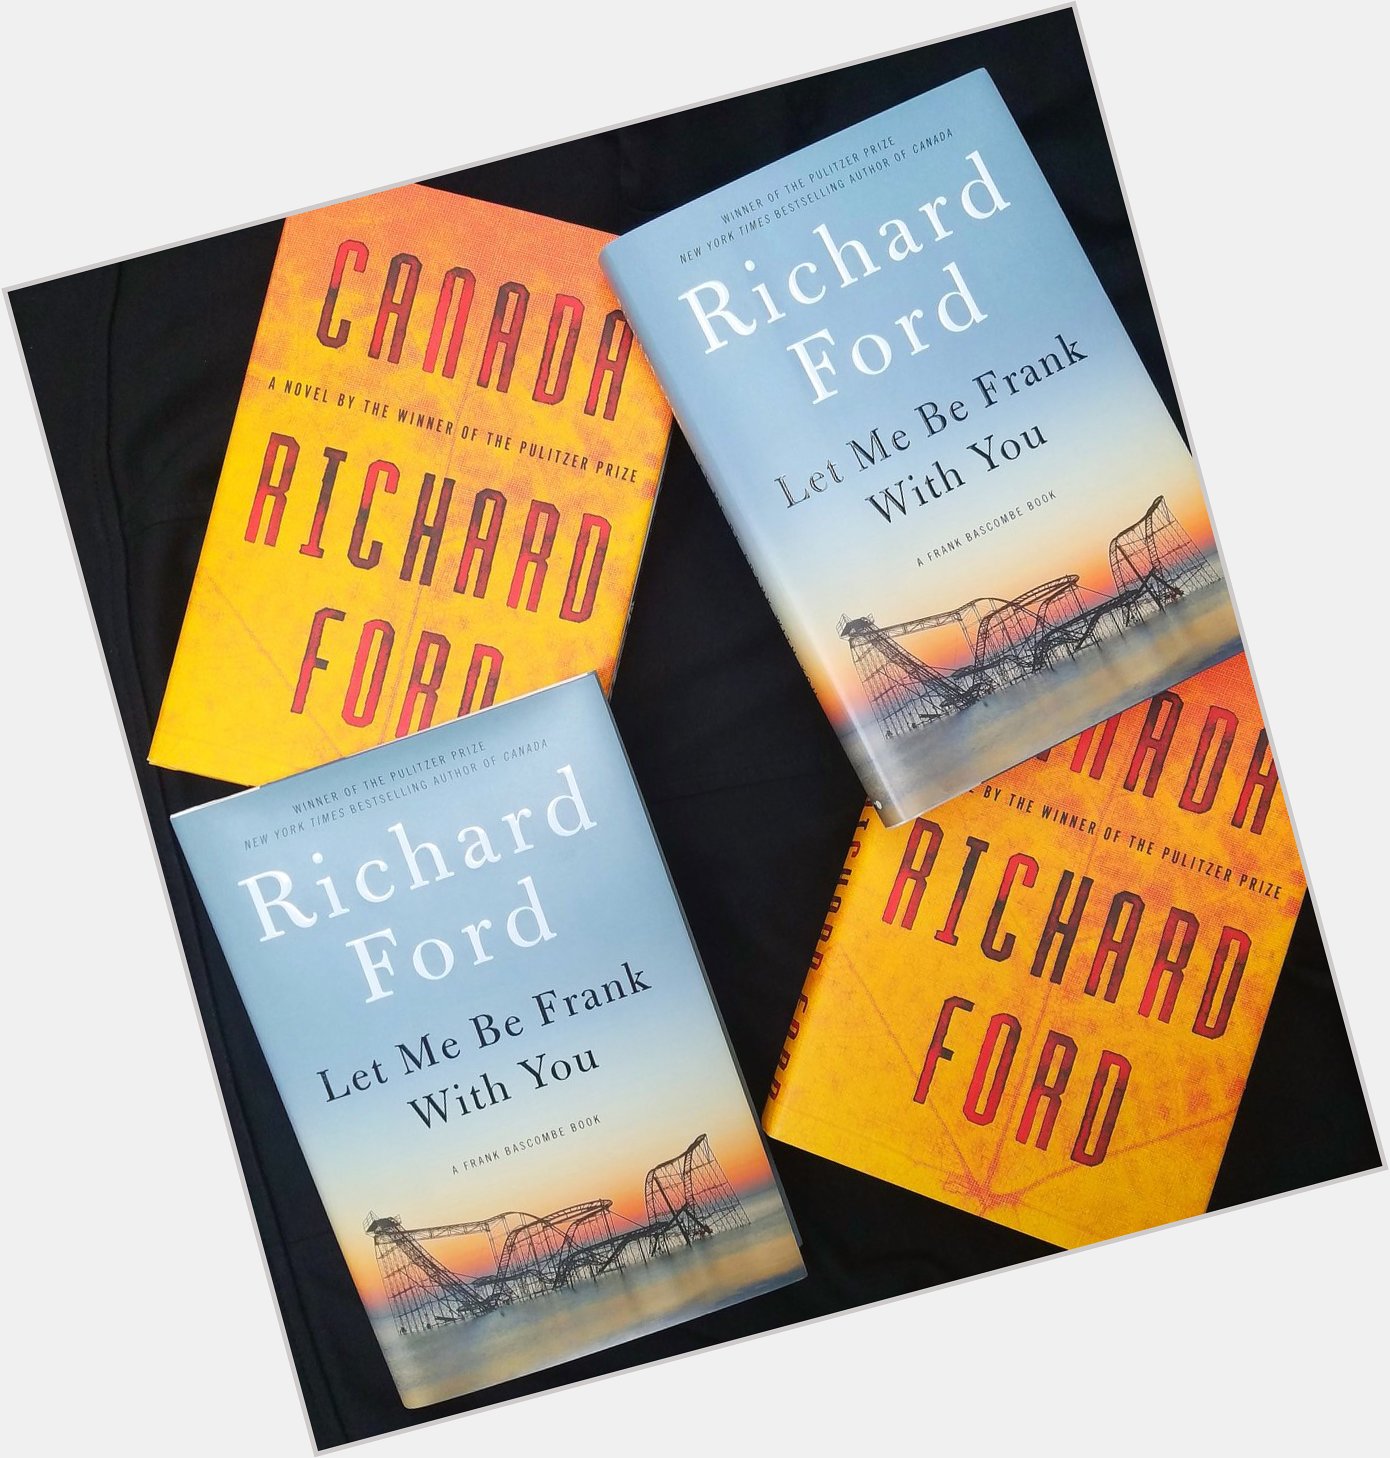 Happy Birthday to Richard Ford!  